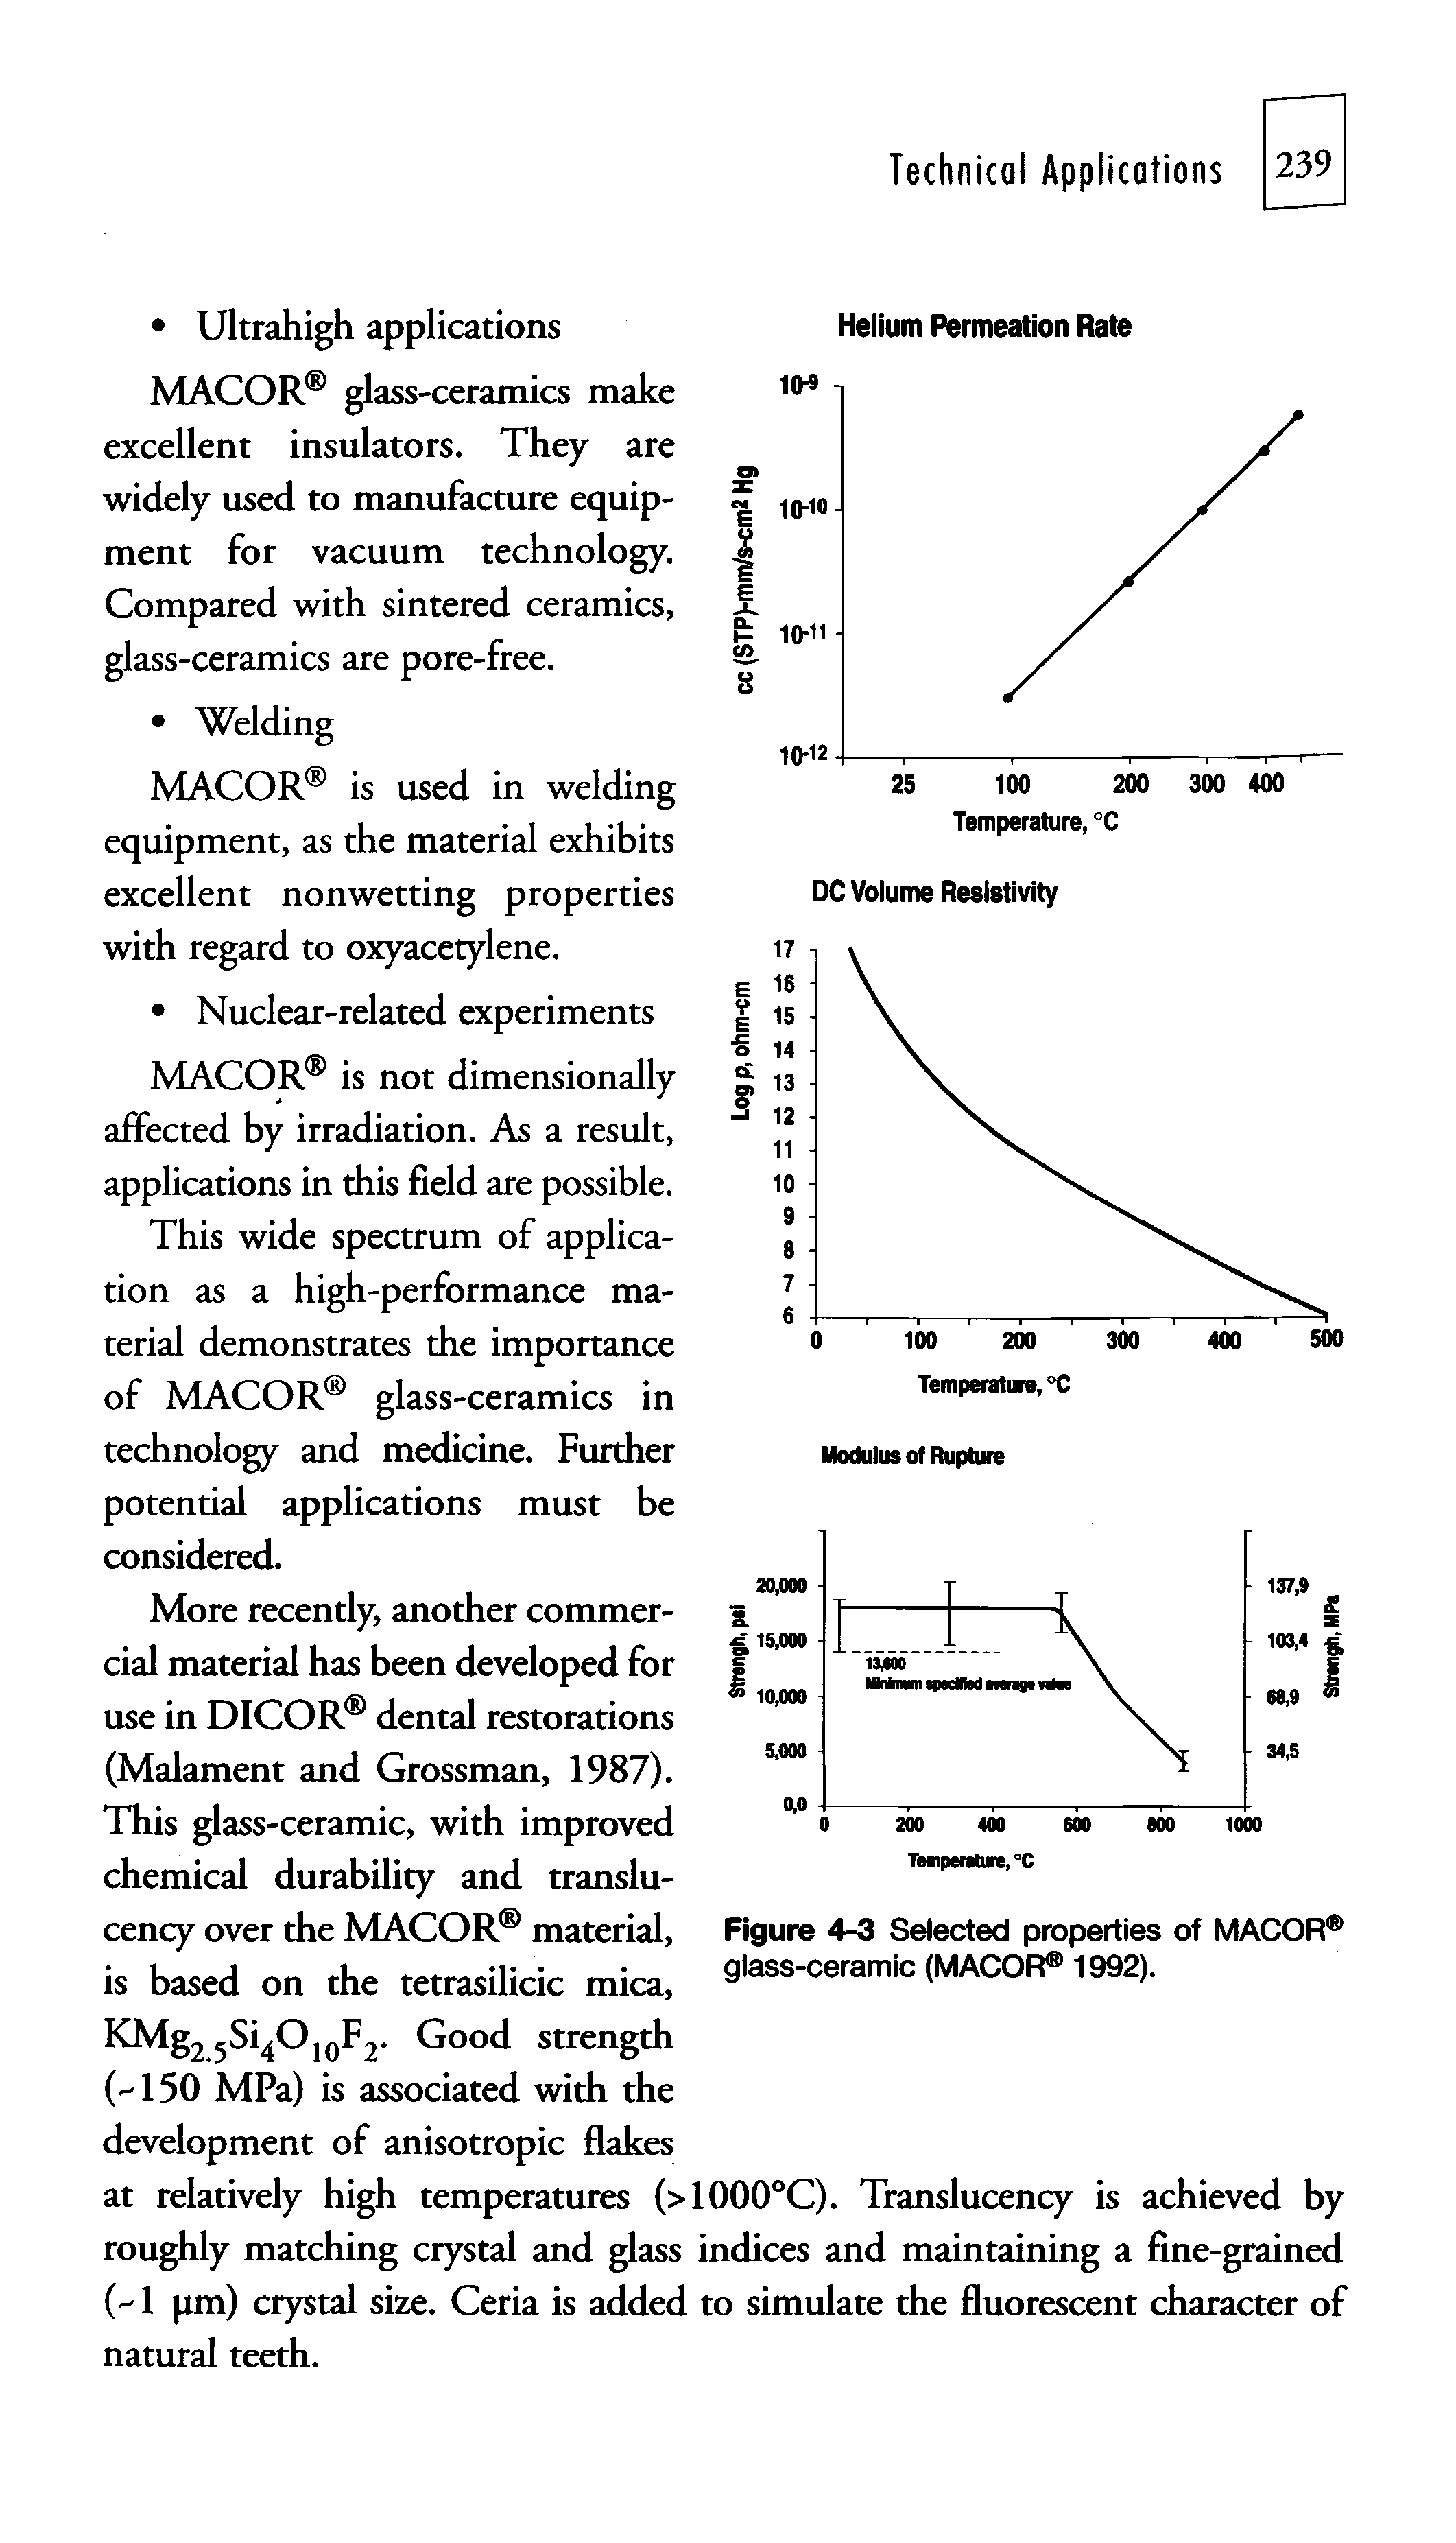 Figure 4-3 Selected properties of MACOR glass-ceramic (MACOR 1992).